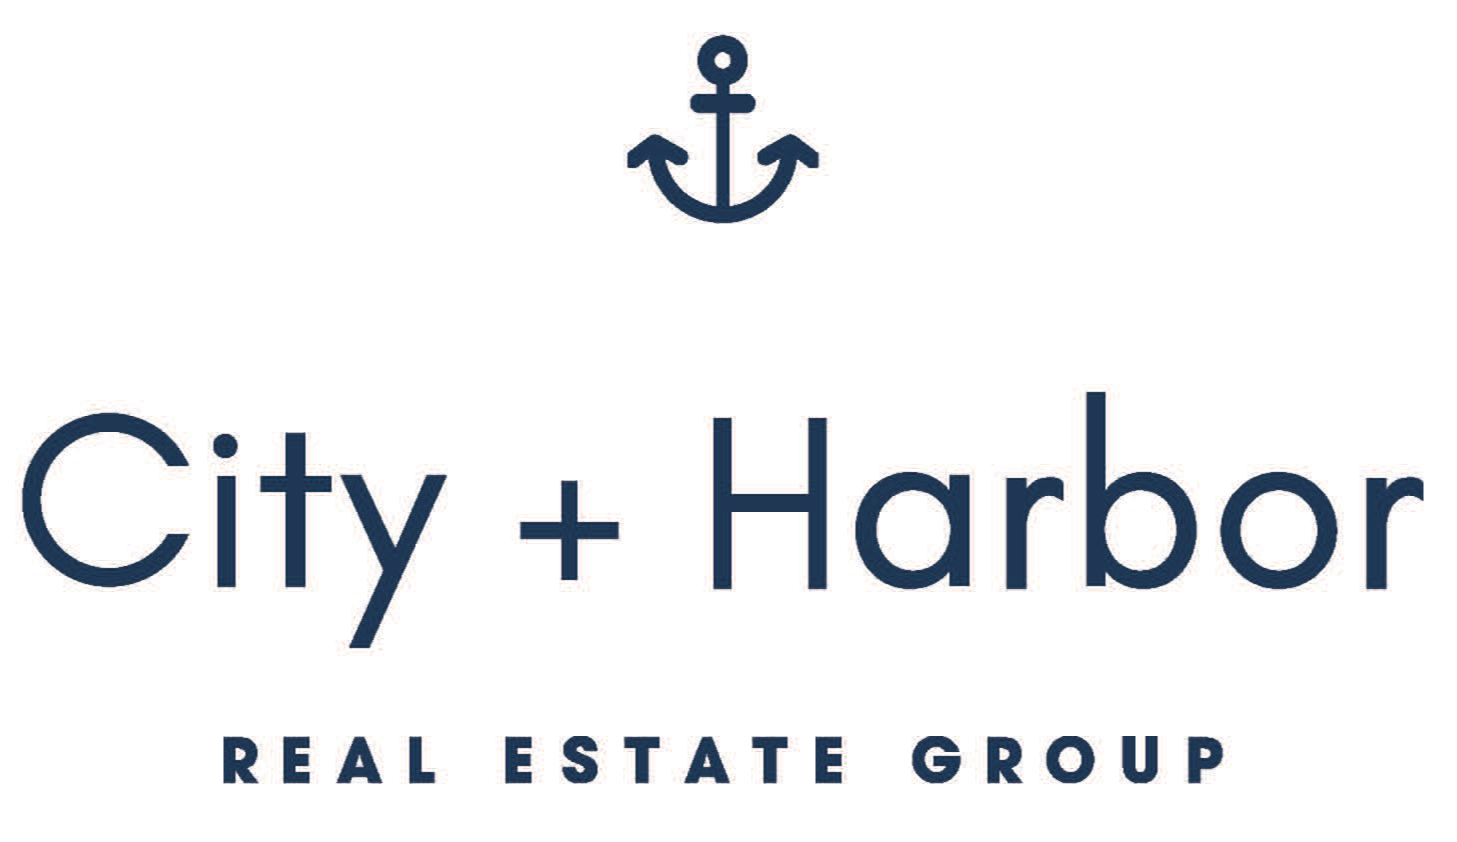 City + Harbor Real Estate Group logo